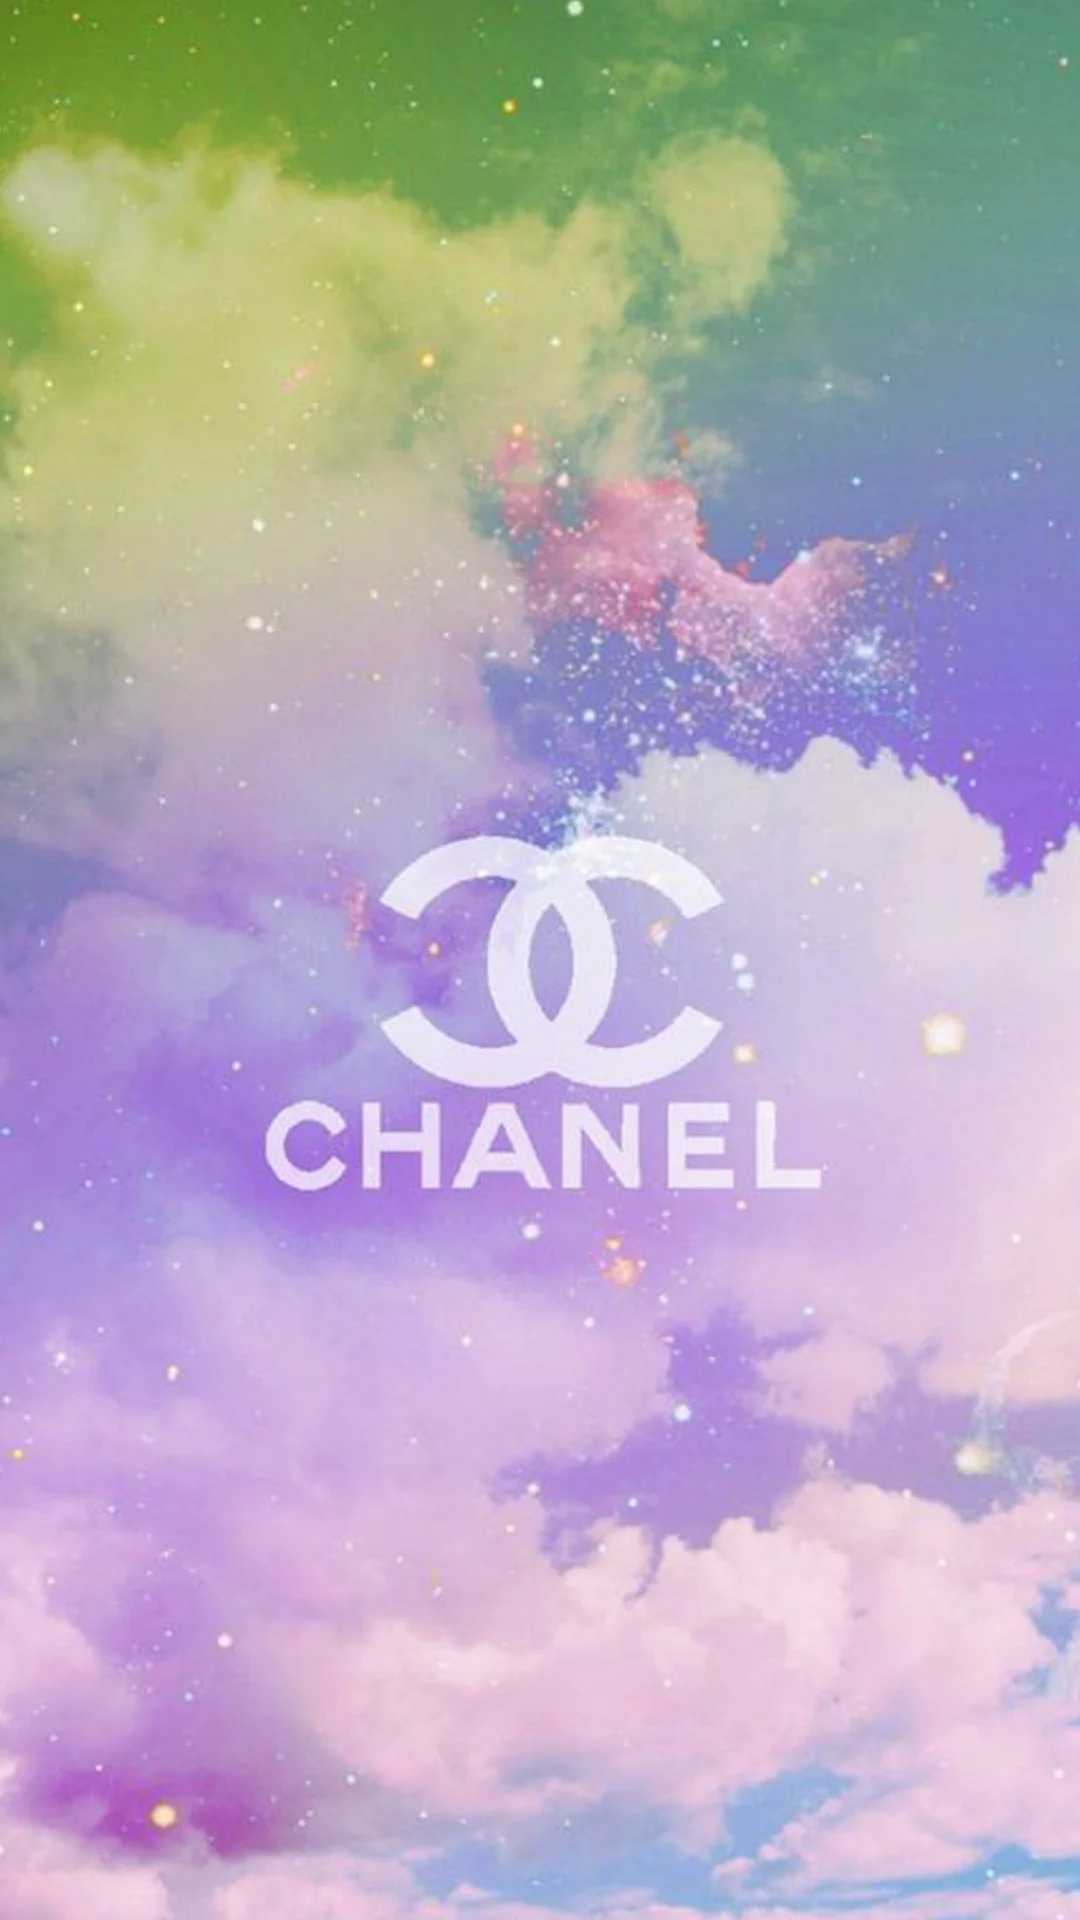 Download Chanel Logos Girly Wallpaper